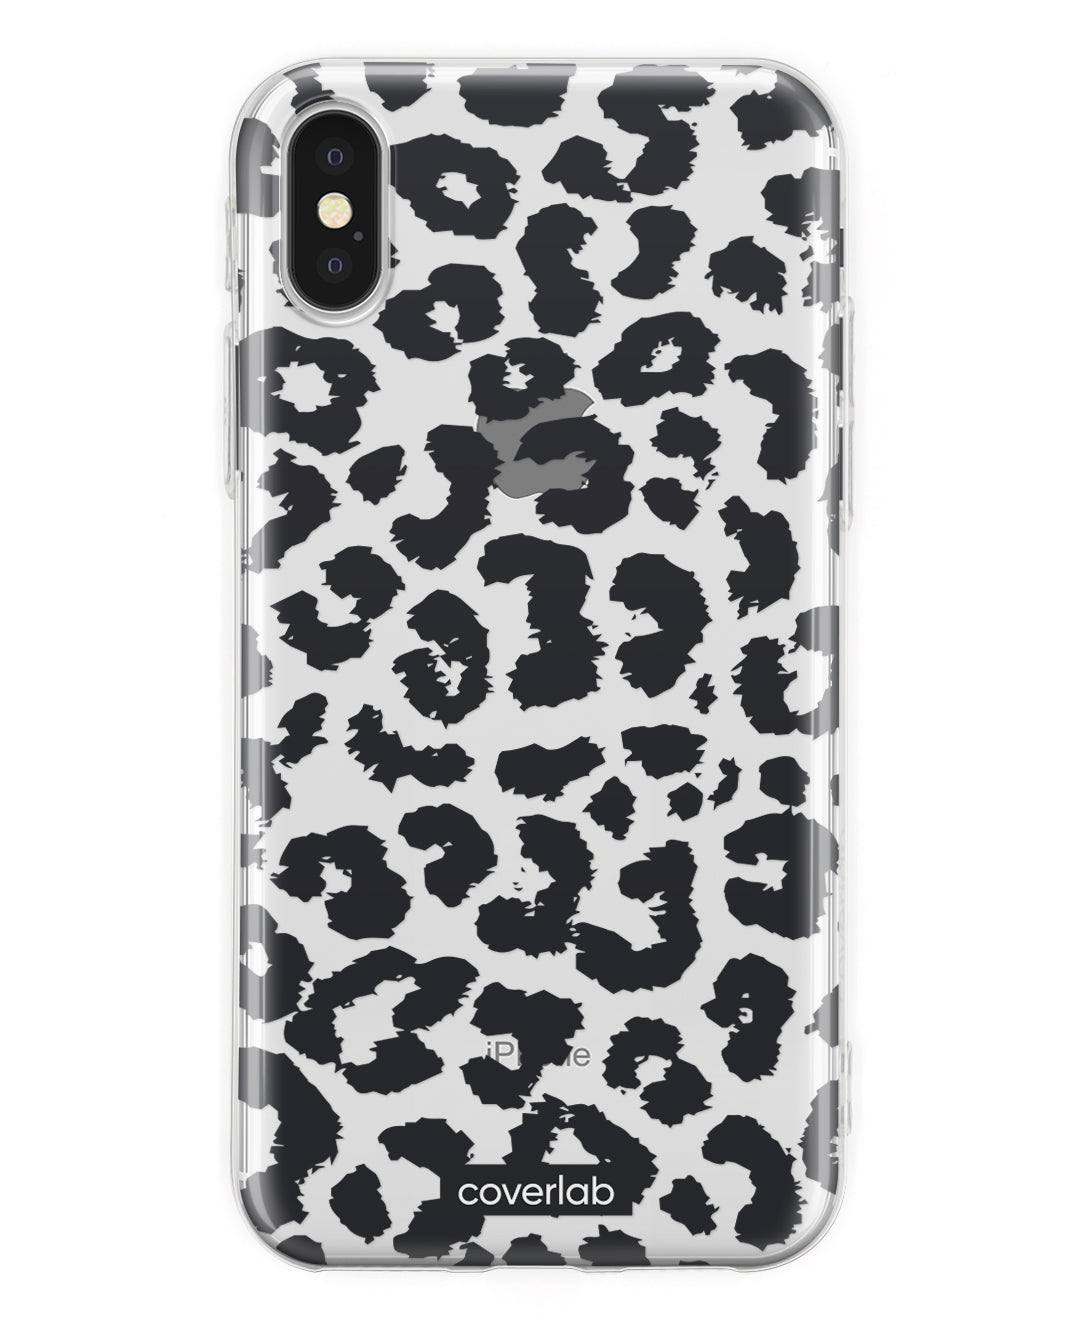 Leopard Print iPhone Case - Coverlab